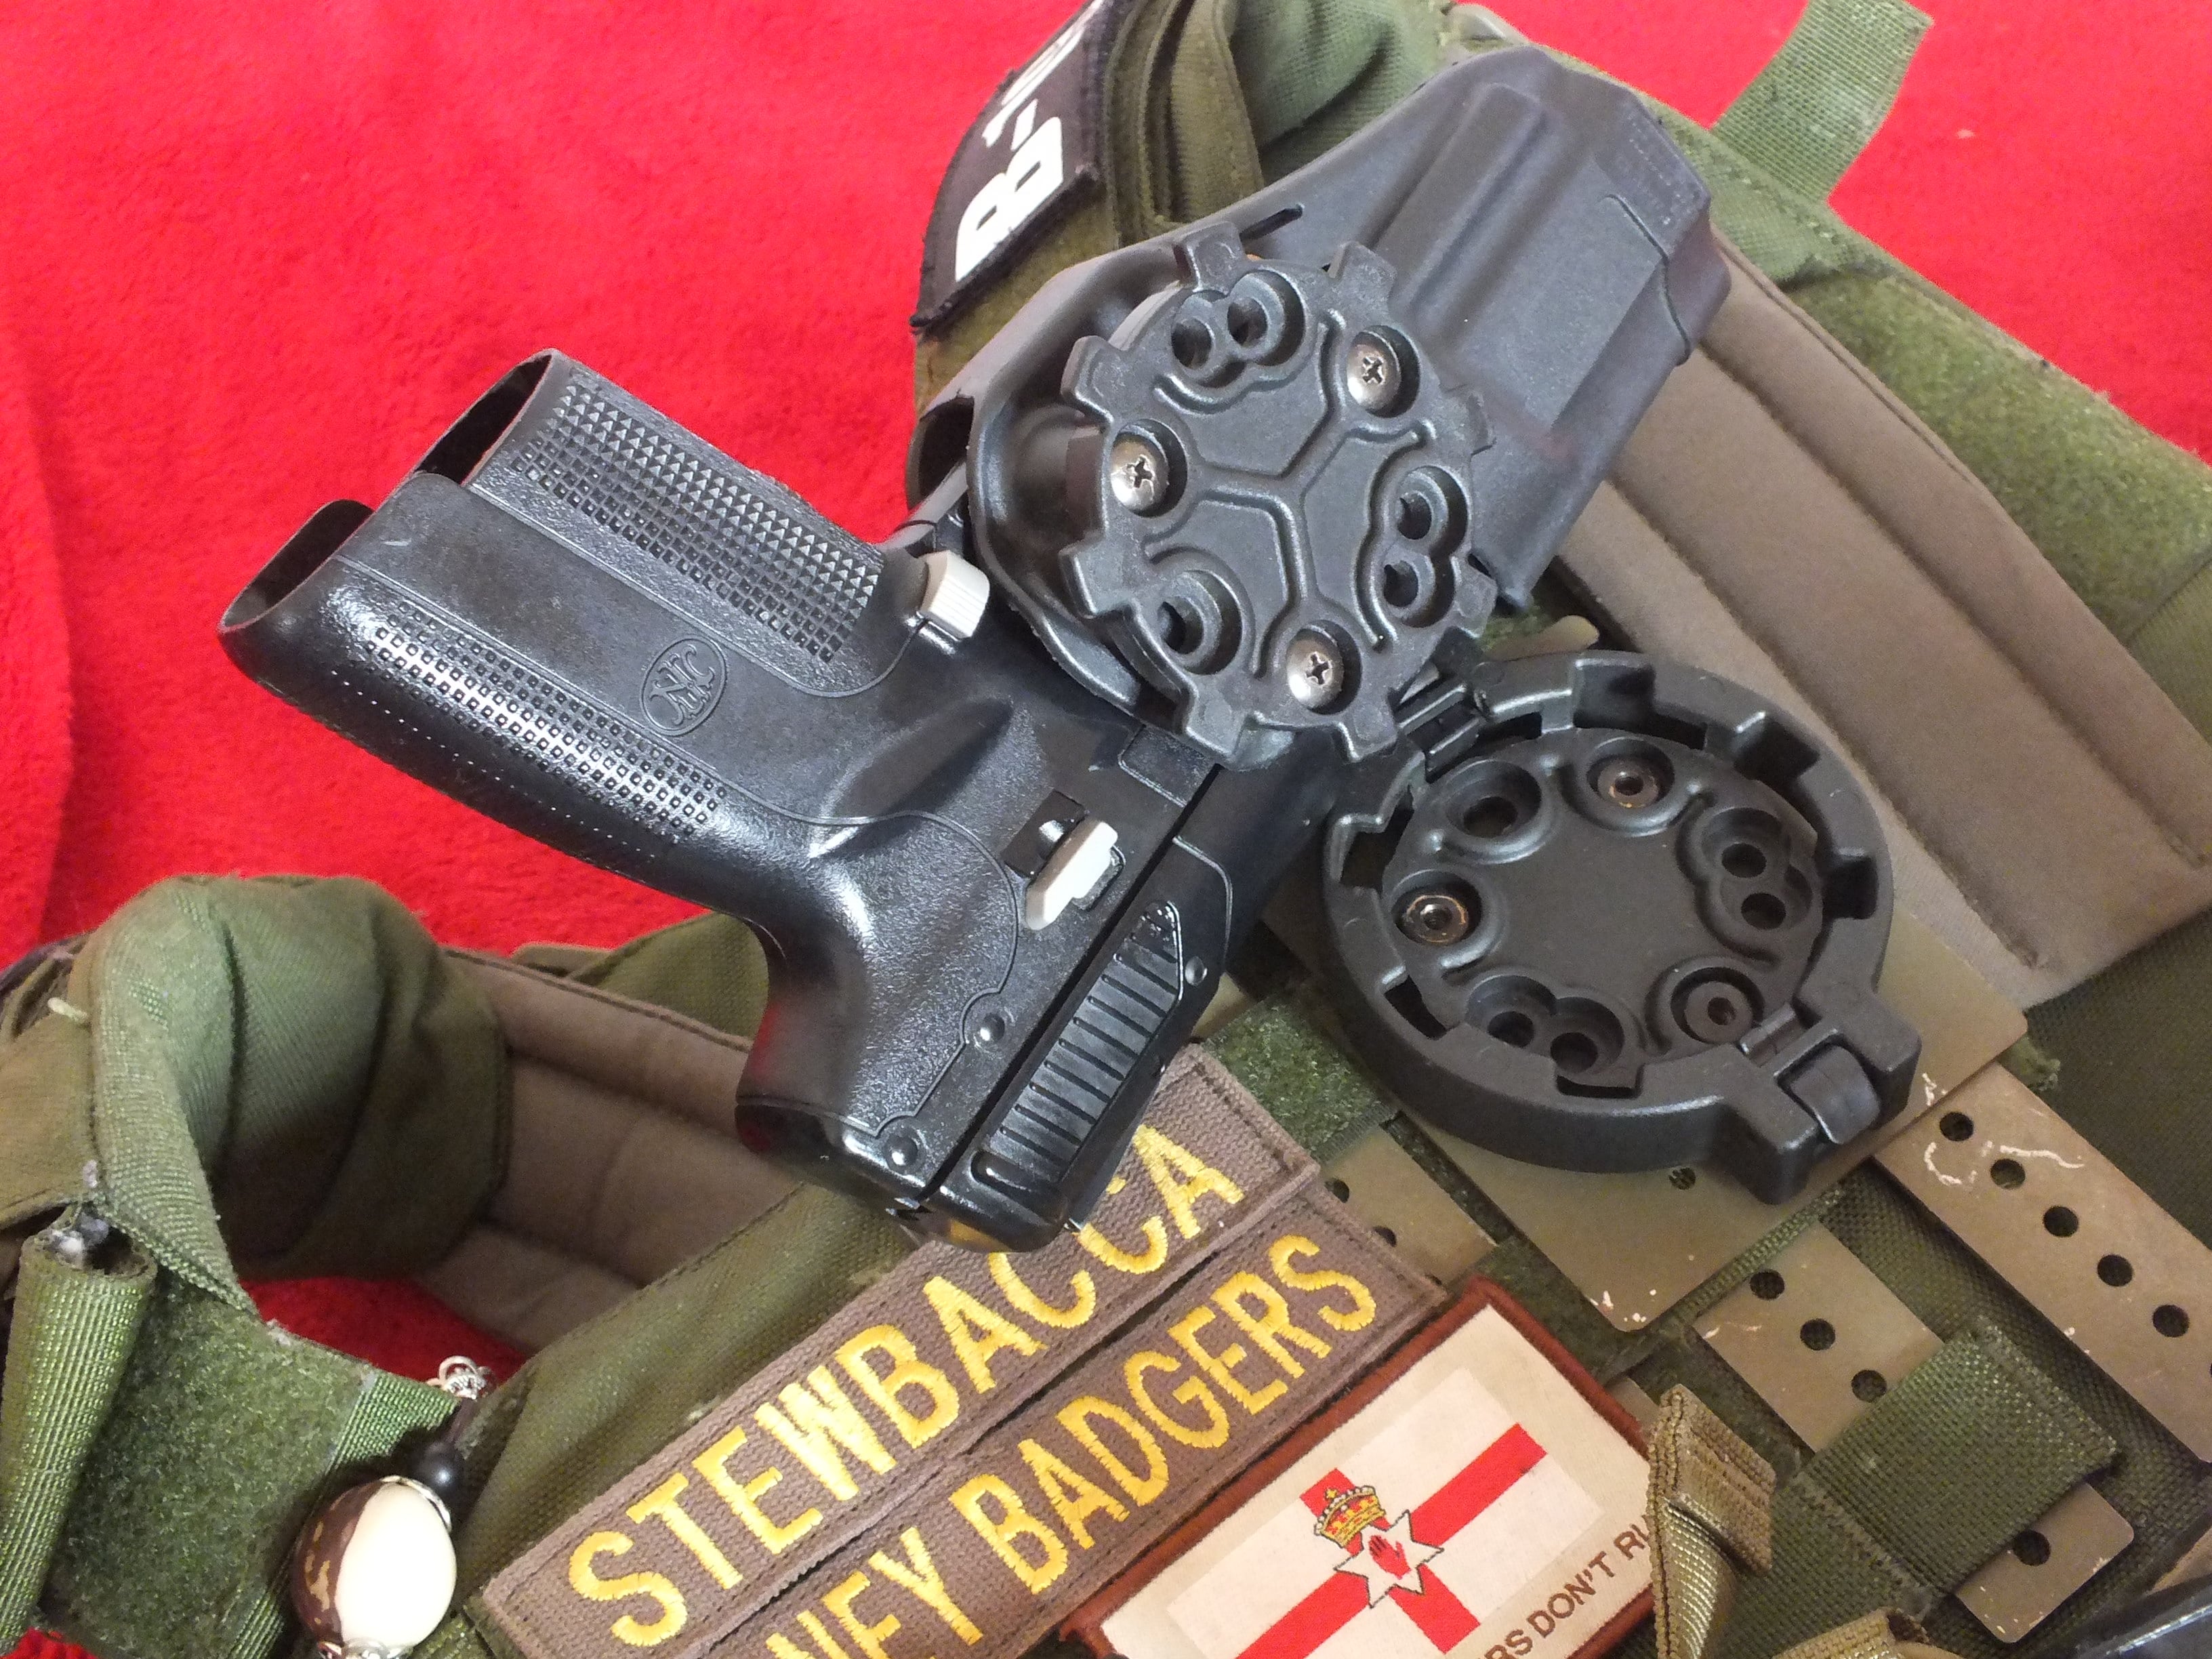 Blackhawk SERPA retention holsters